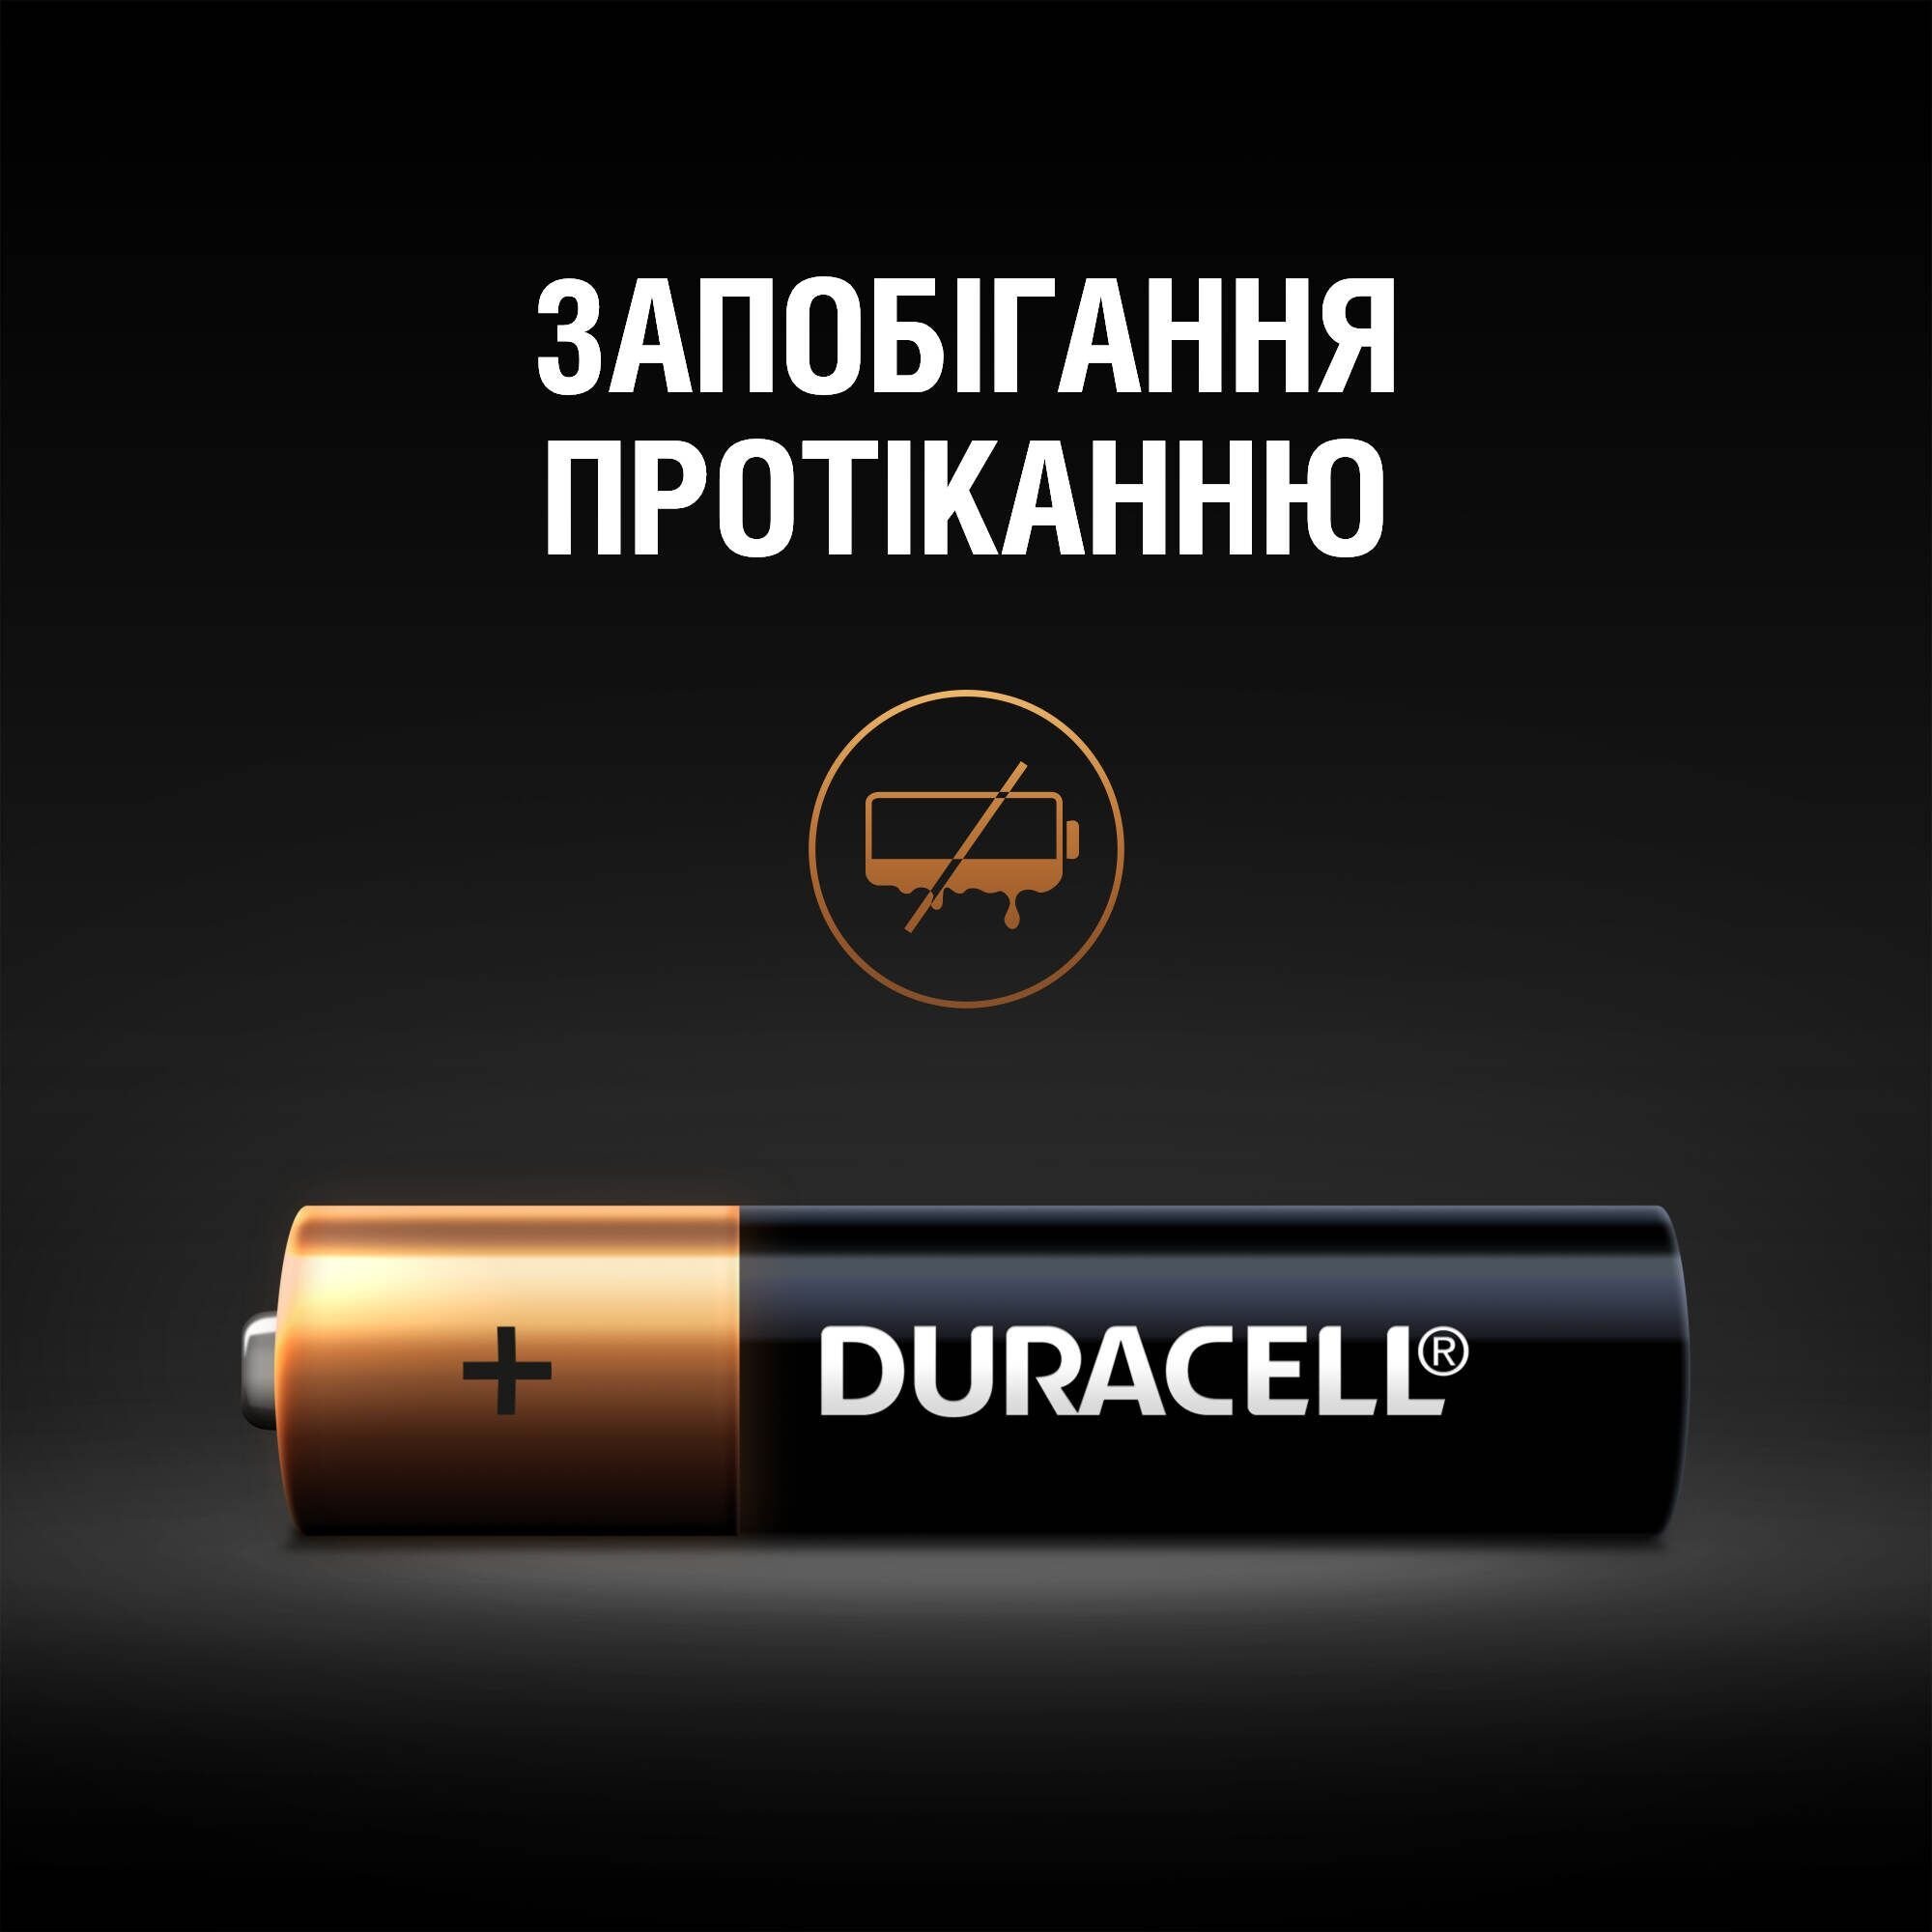 Щелочные батарейки мизинчиковые Duracell 1,5 V AAA LR03/MN2400, 12 шт. - фото 7